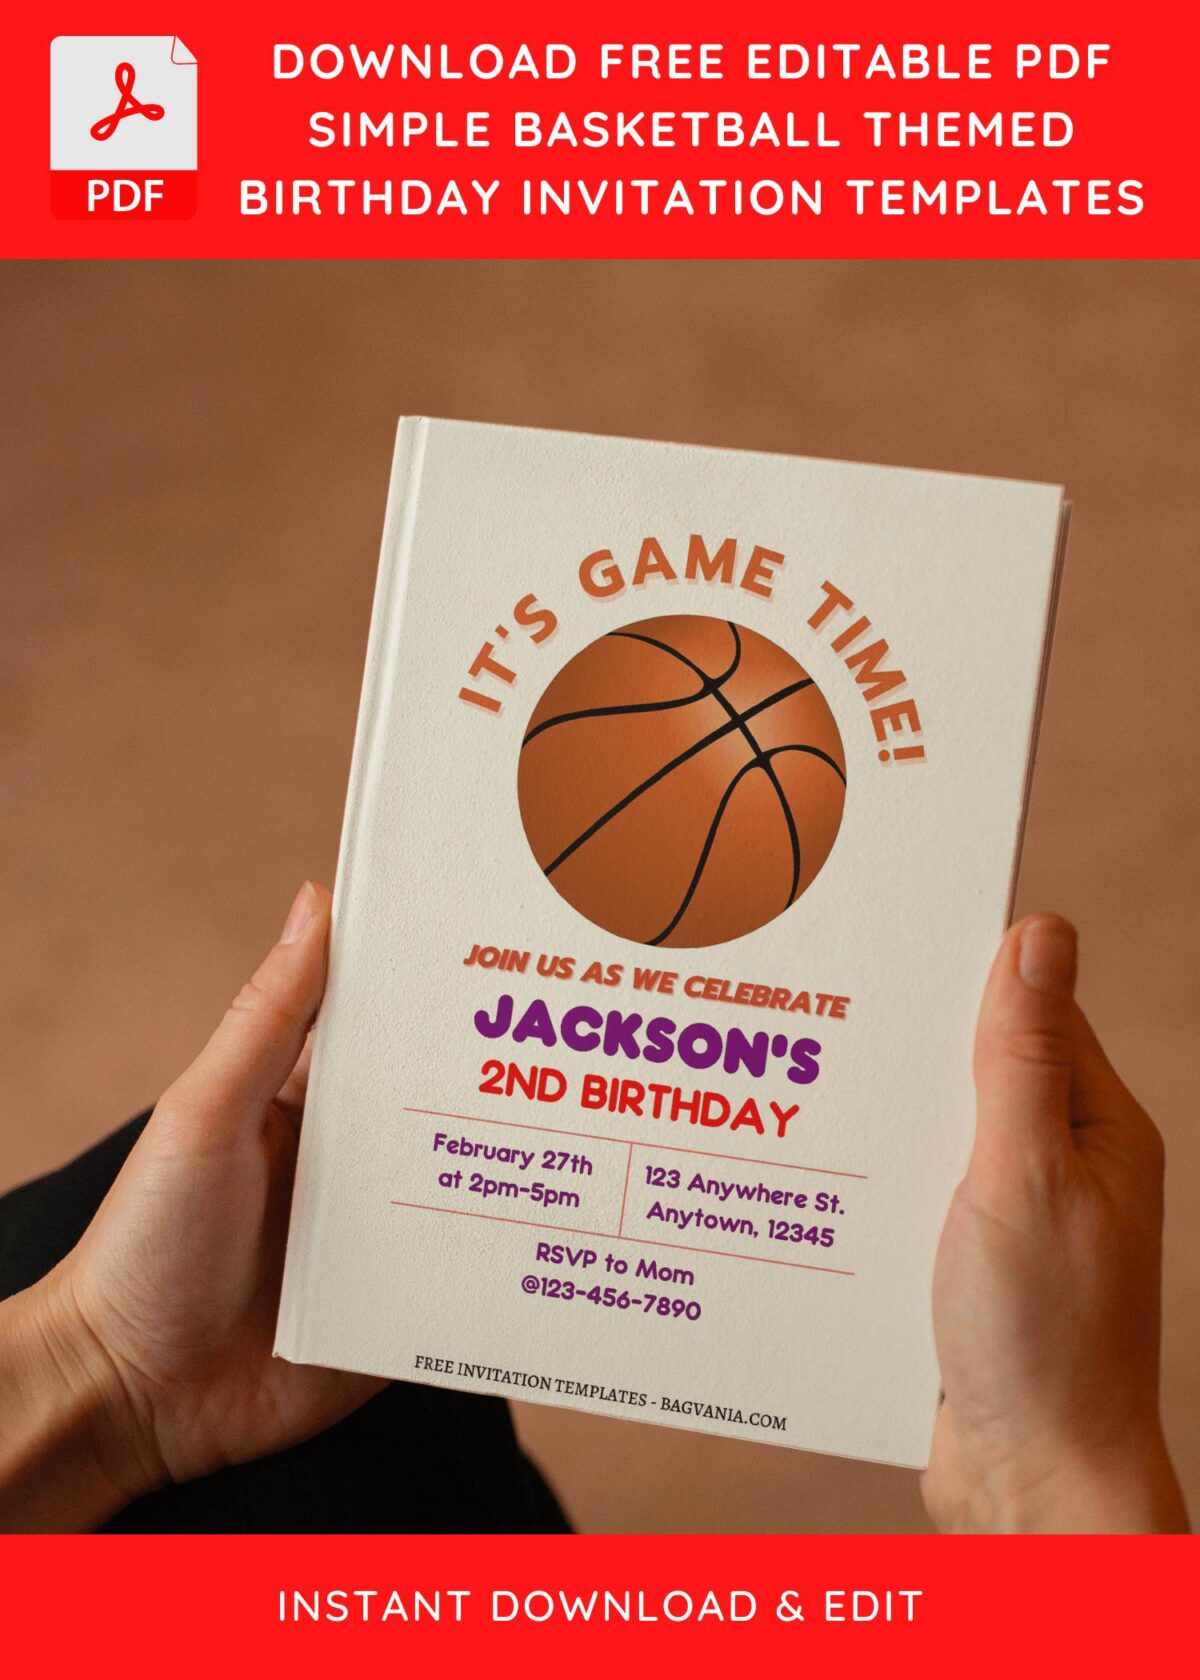 (Free Editable PDF) Game Time Basketball Birthday Invitation Templates E